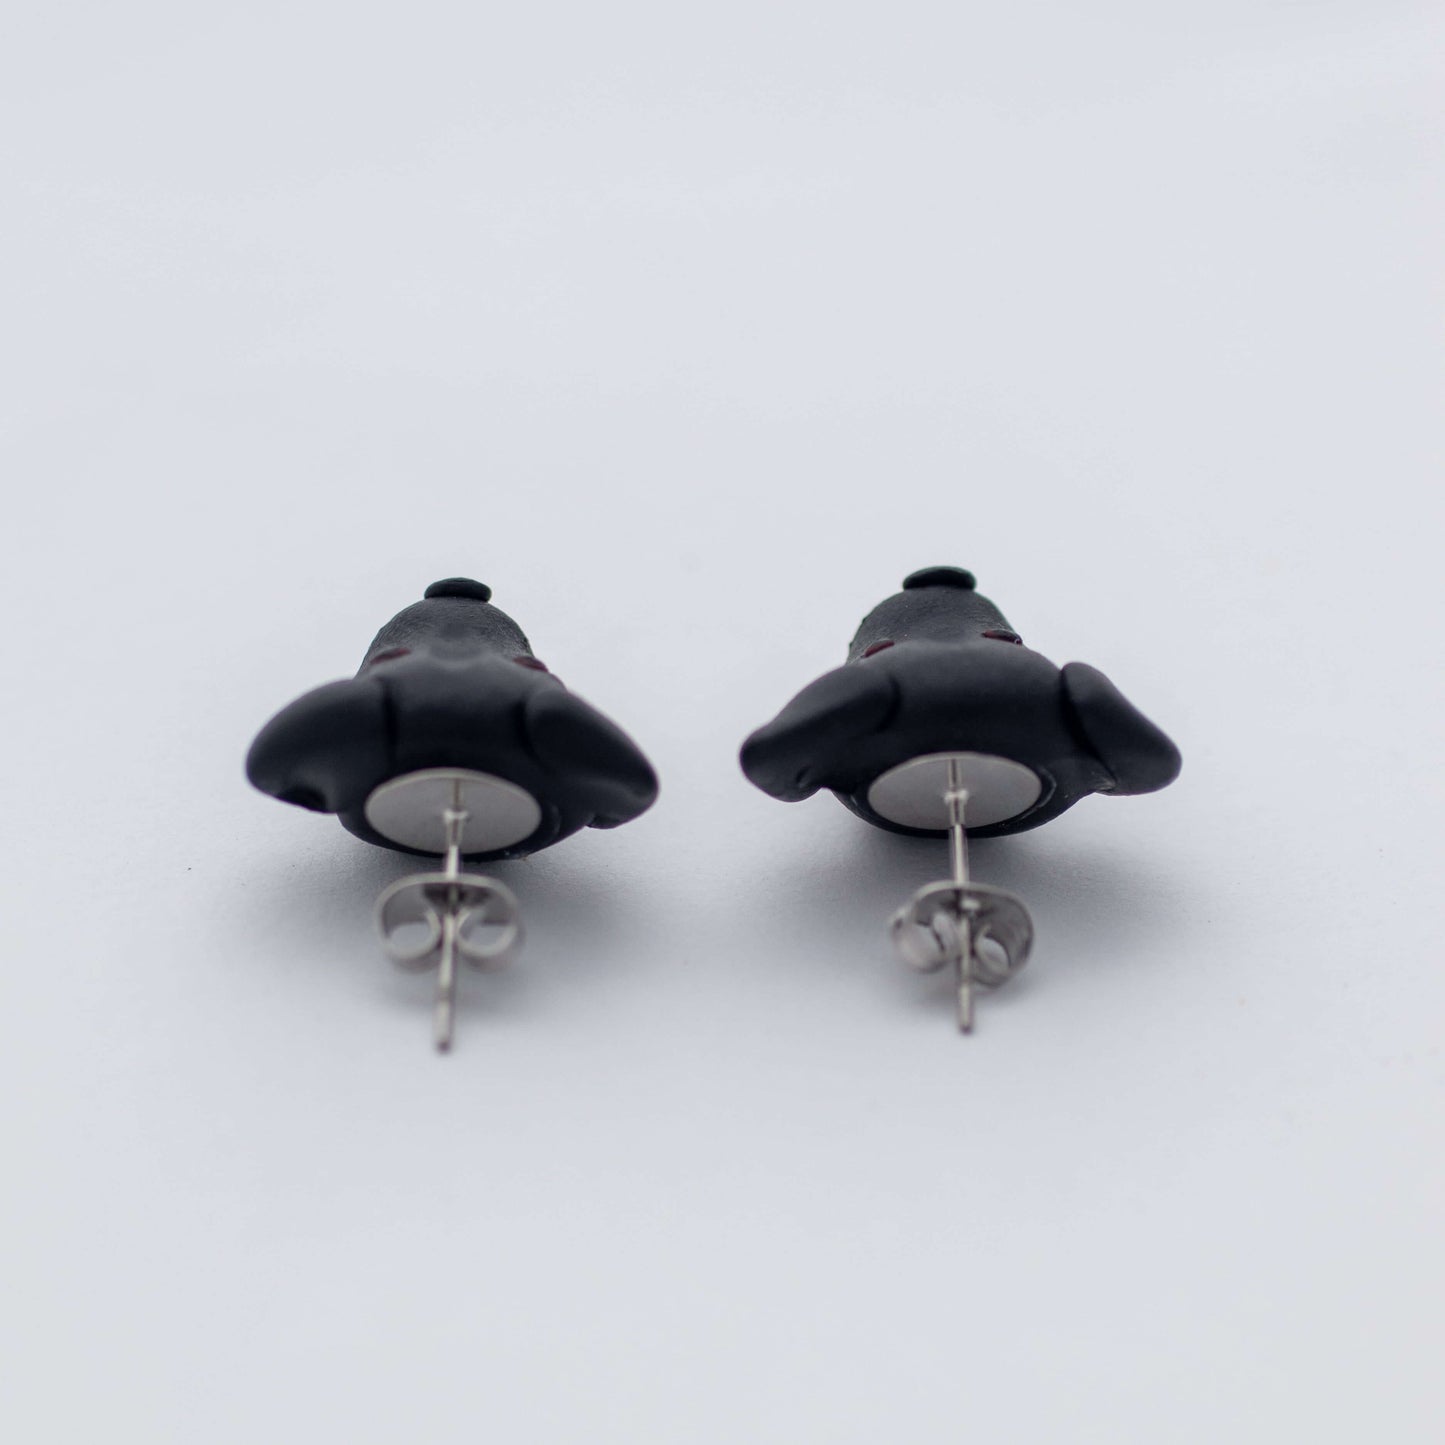 Handmade polymer clay black lab stud earrings showing surgical steel backs